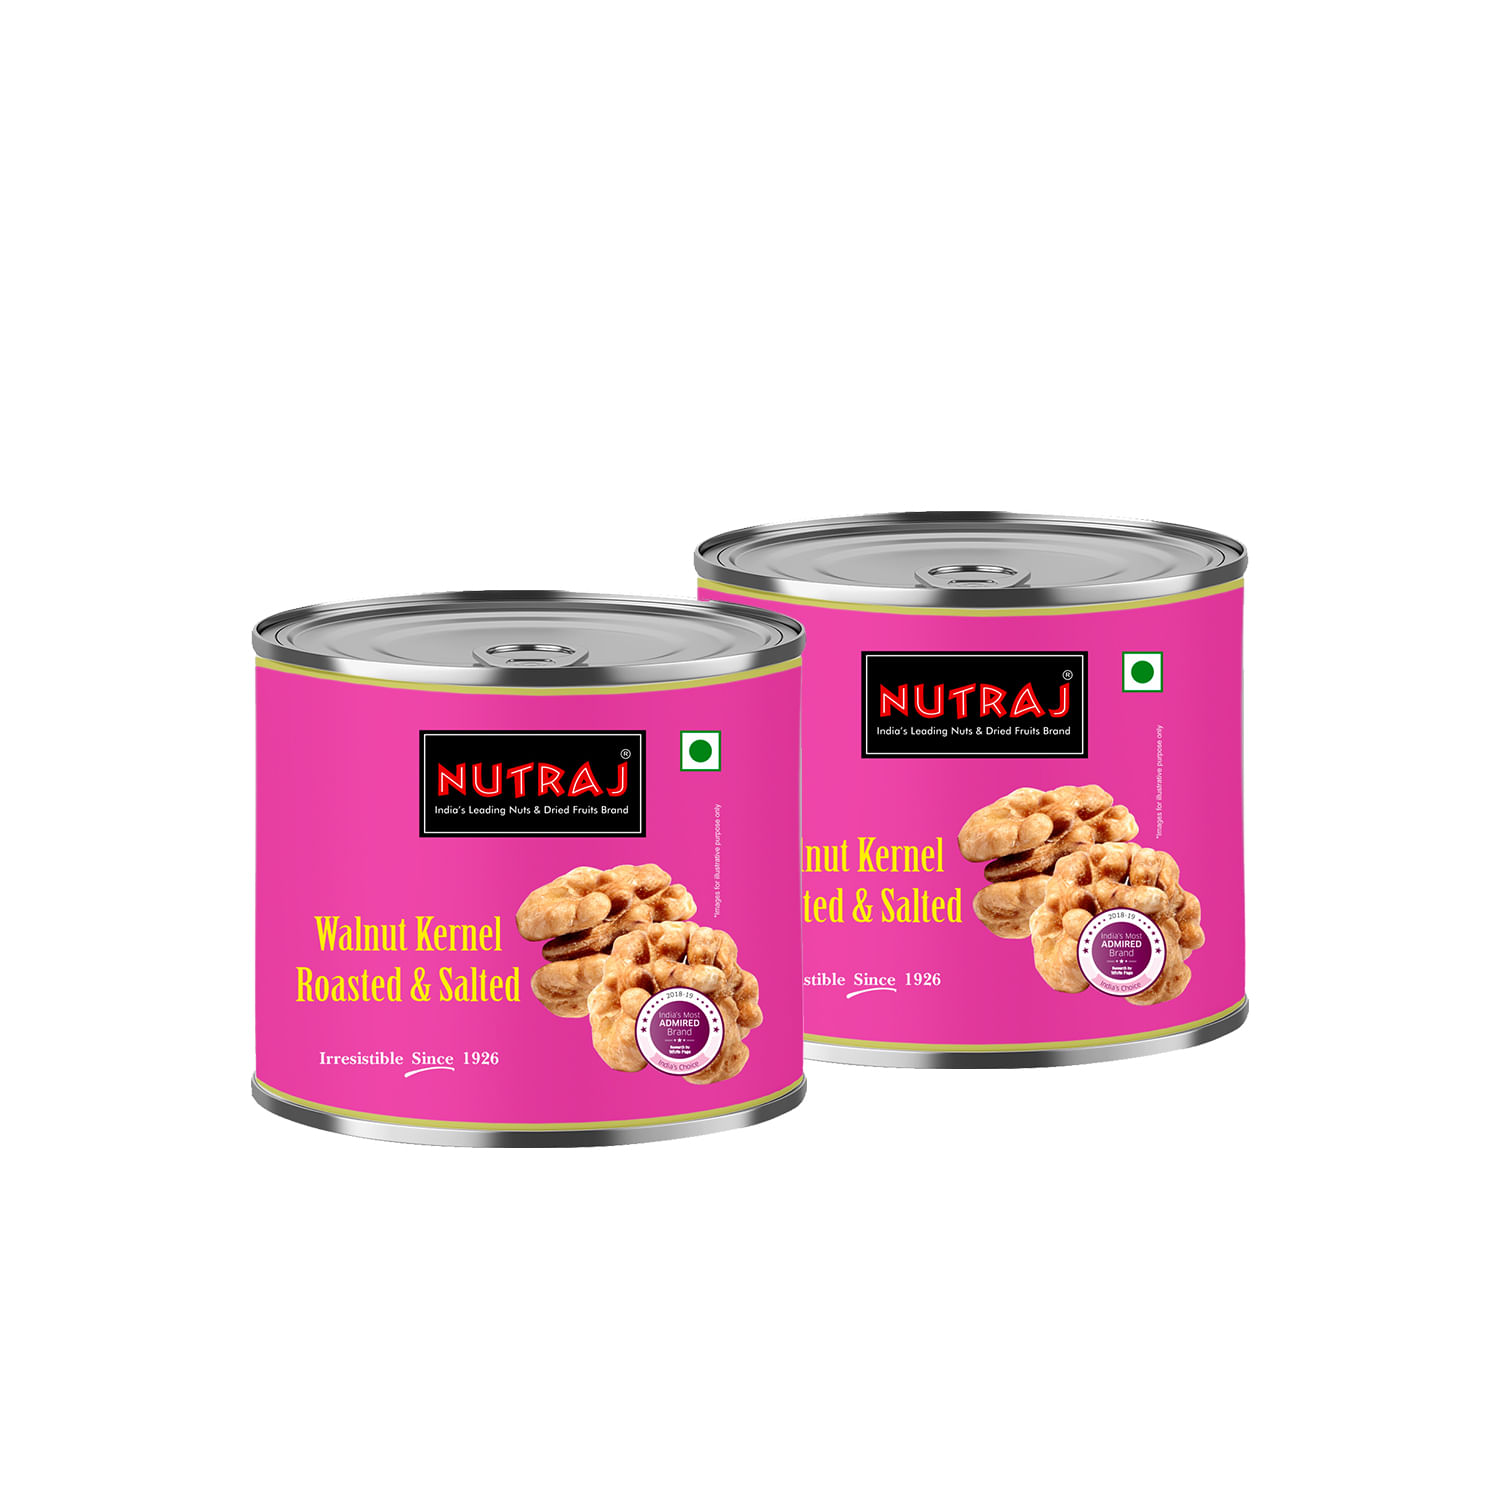 Nutraj Roasted and Salted Walnut Kernels 200g (100g X 2) Tin Pack